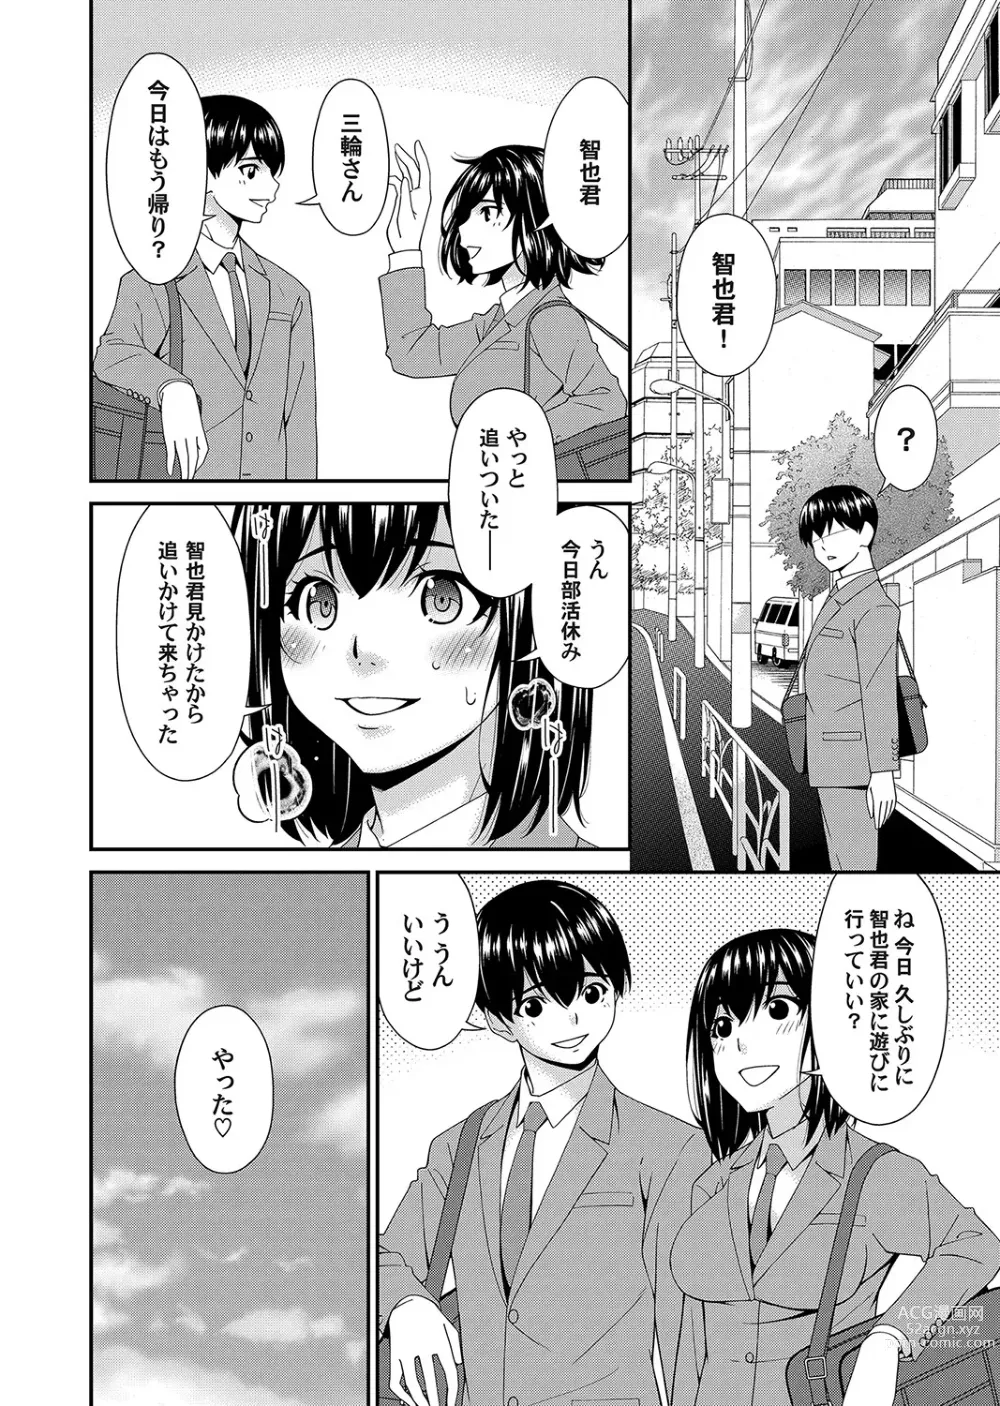 Page 5 of manga COMIC Magnum Vol. 171